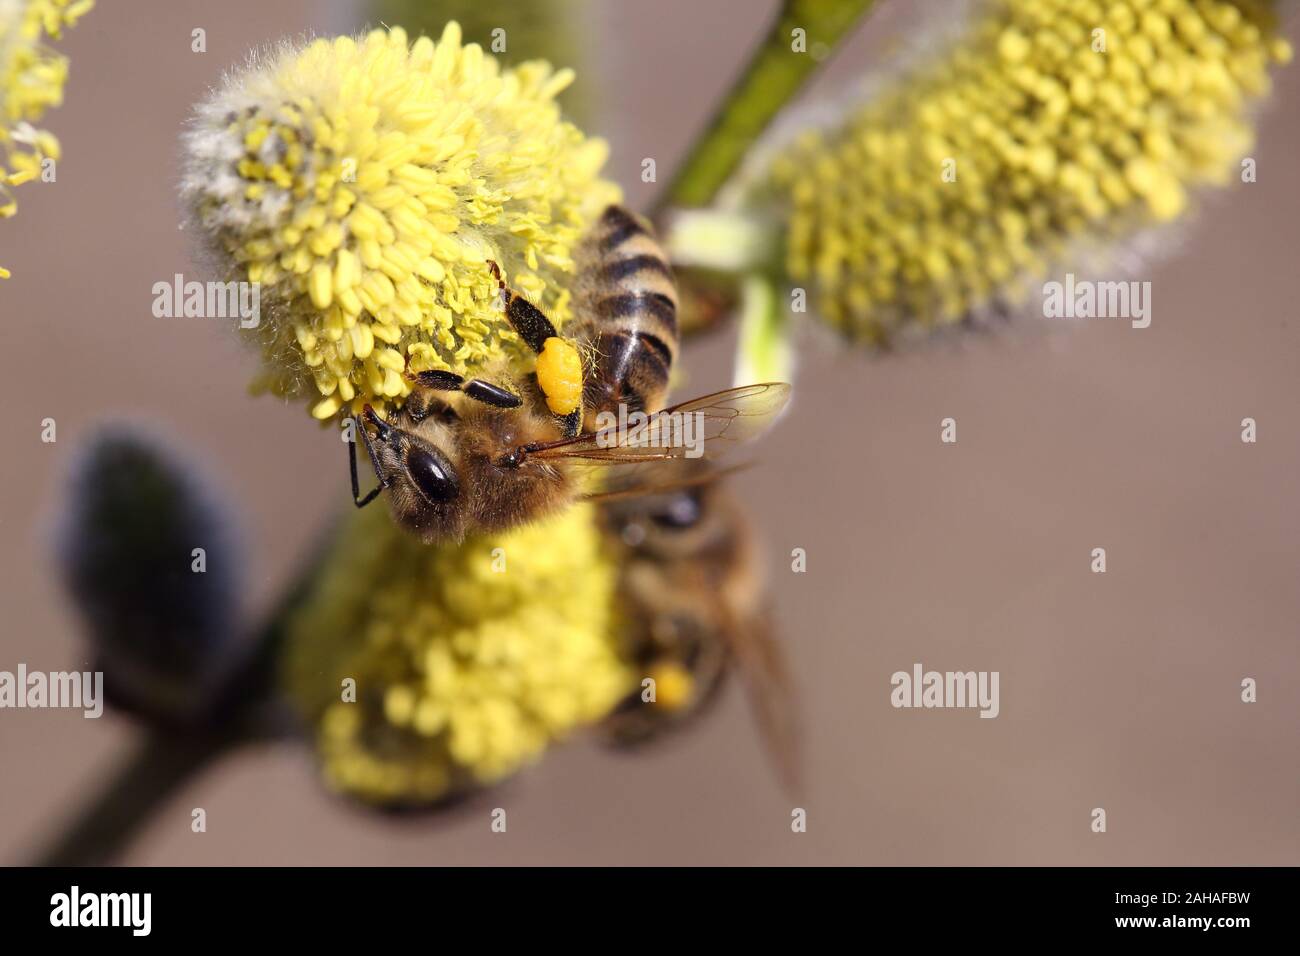 08.04.2018, Briescht, Brandenburg, Germany - European honeybees collect pollen from flowering willow catkins on the willow. 00S180408D207CAROEX.JPG [M Stock Photo